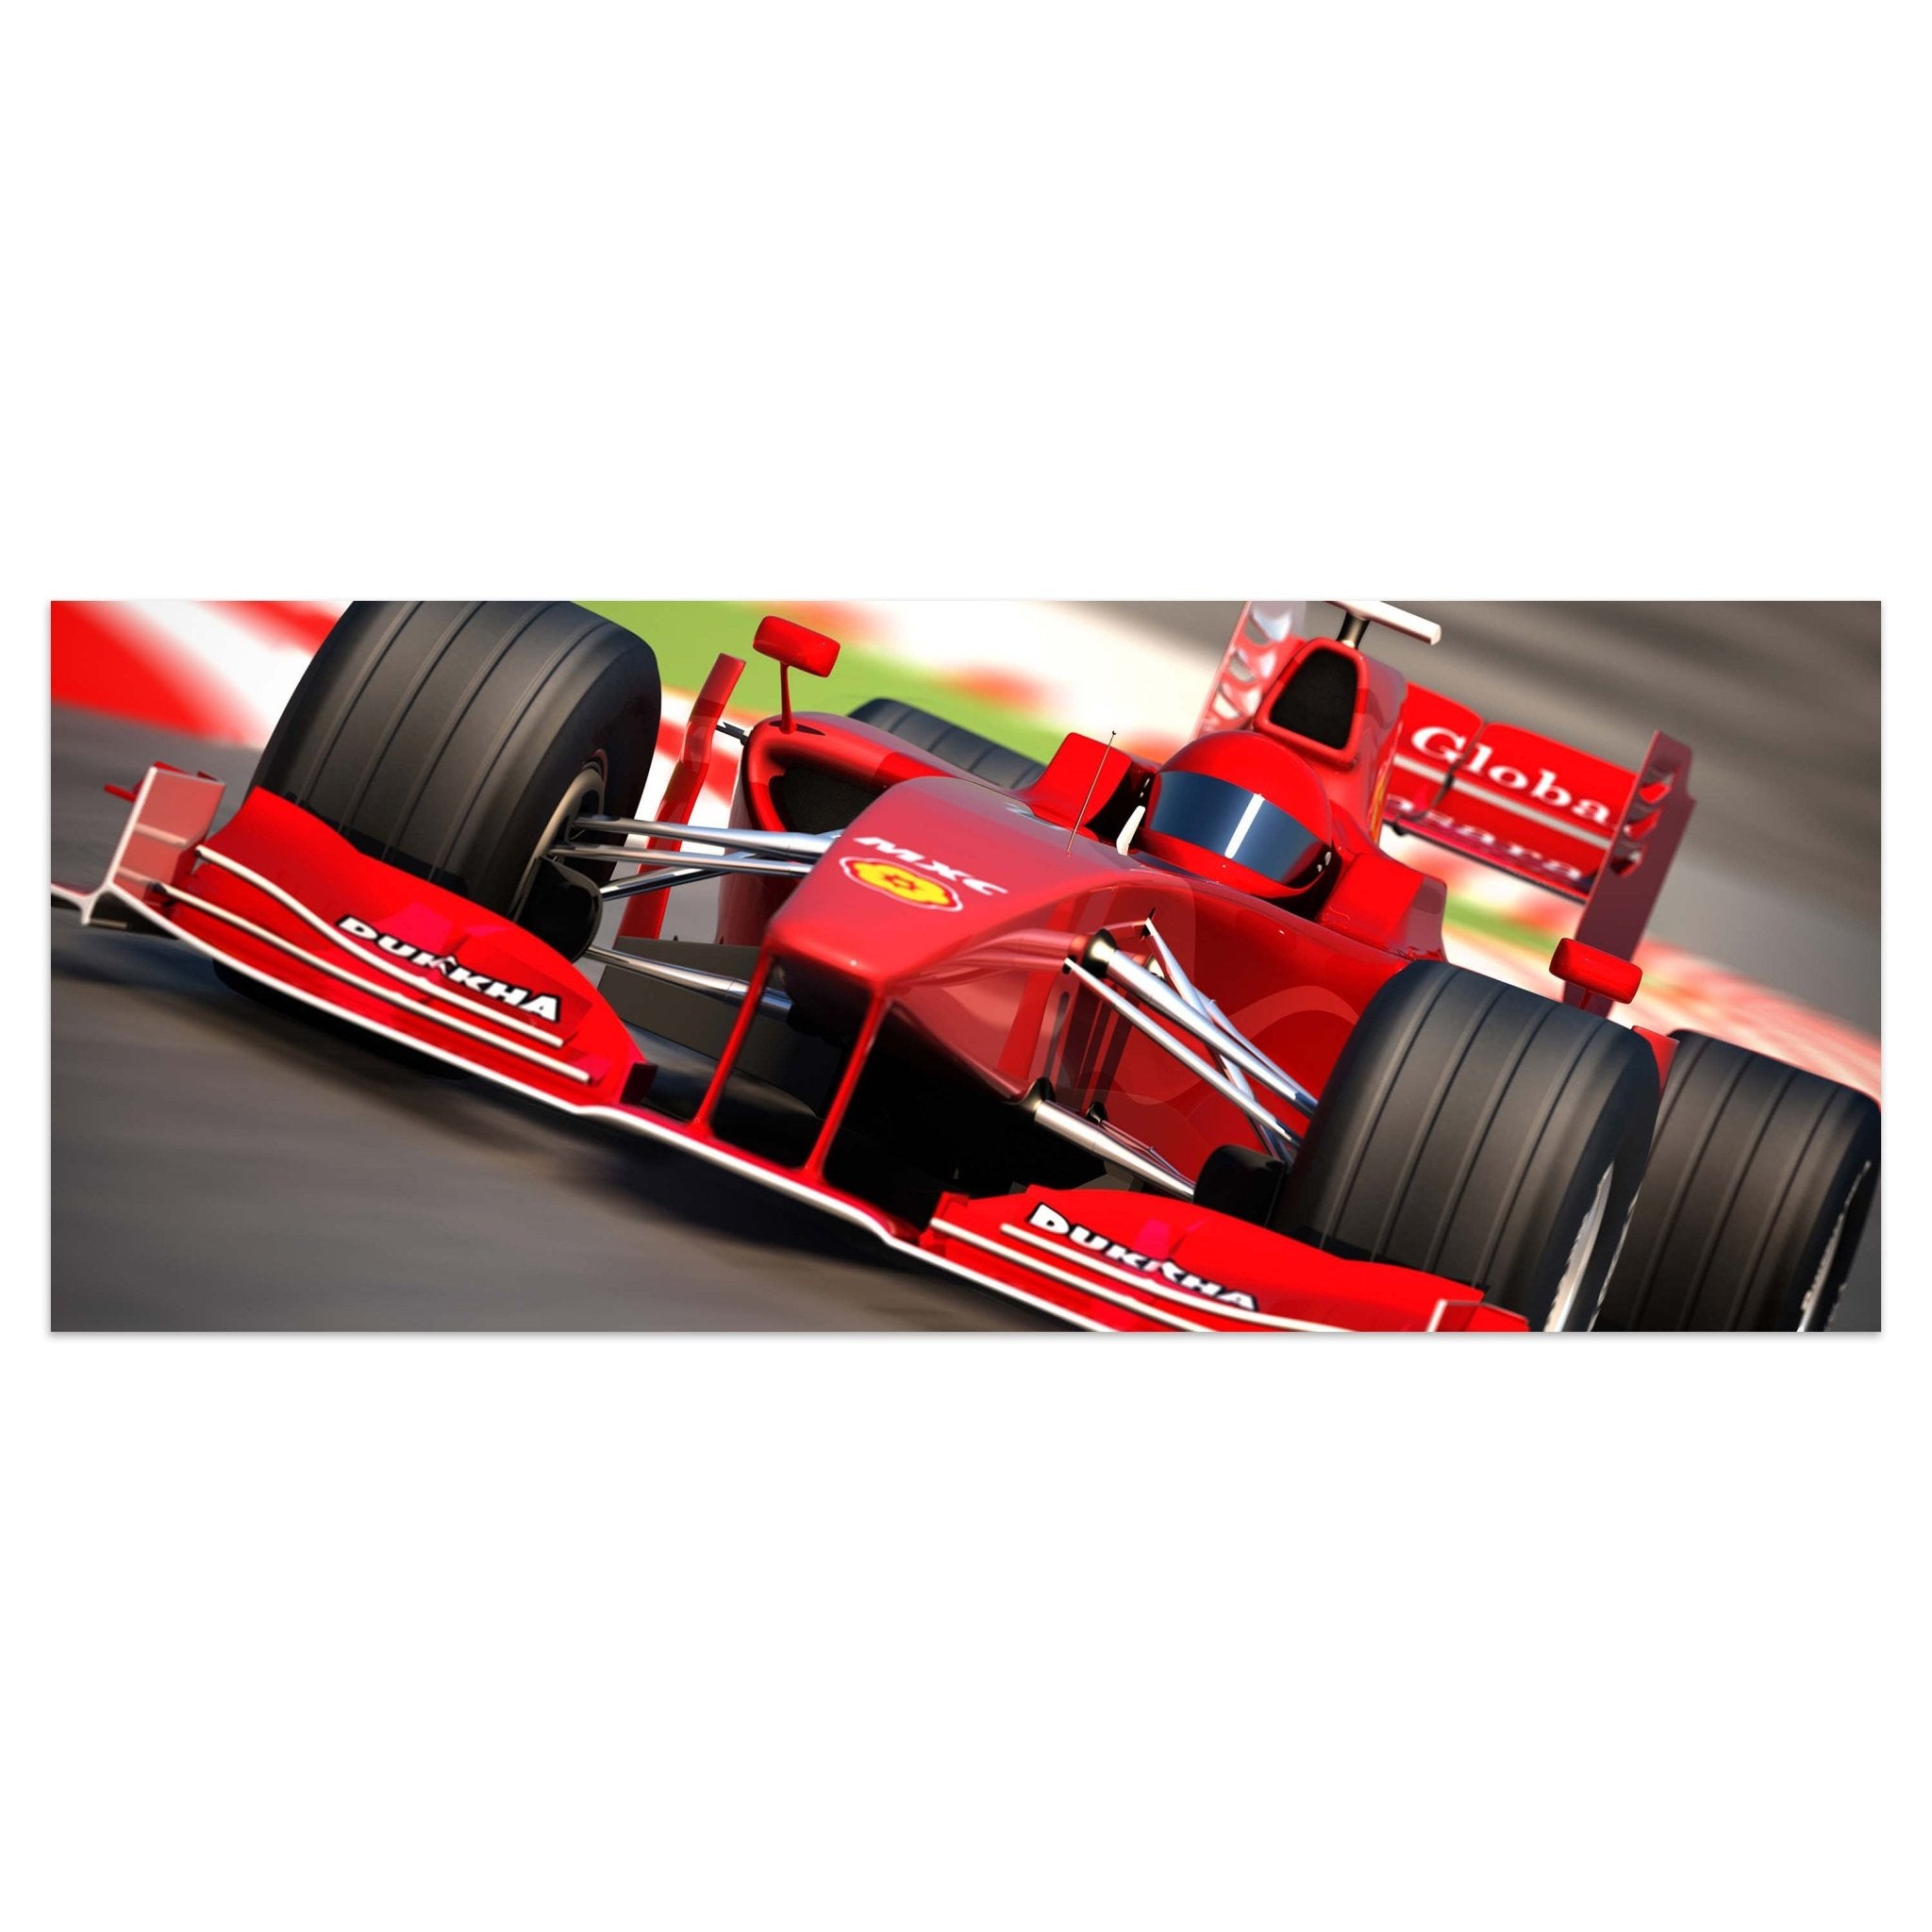 Leinwandbild Formel 1 M0382 kaufen - Bild 1